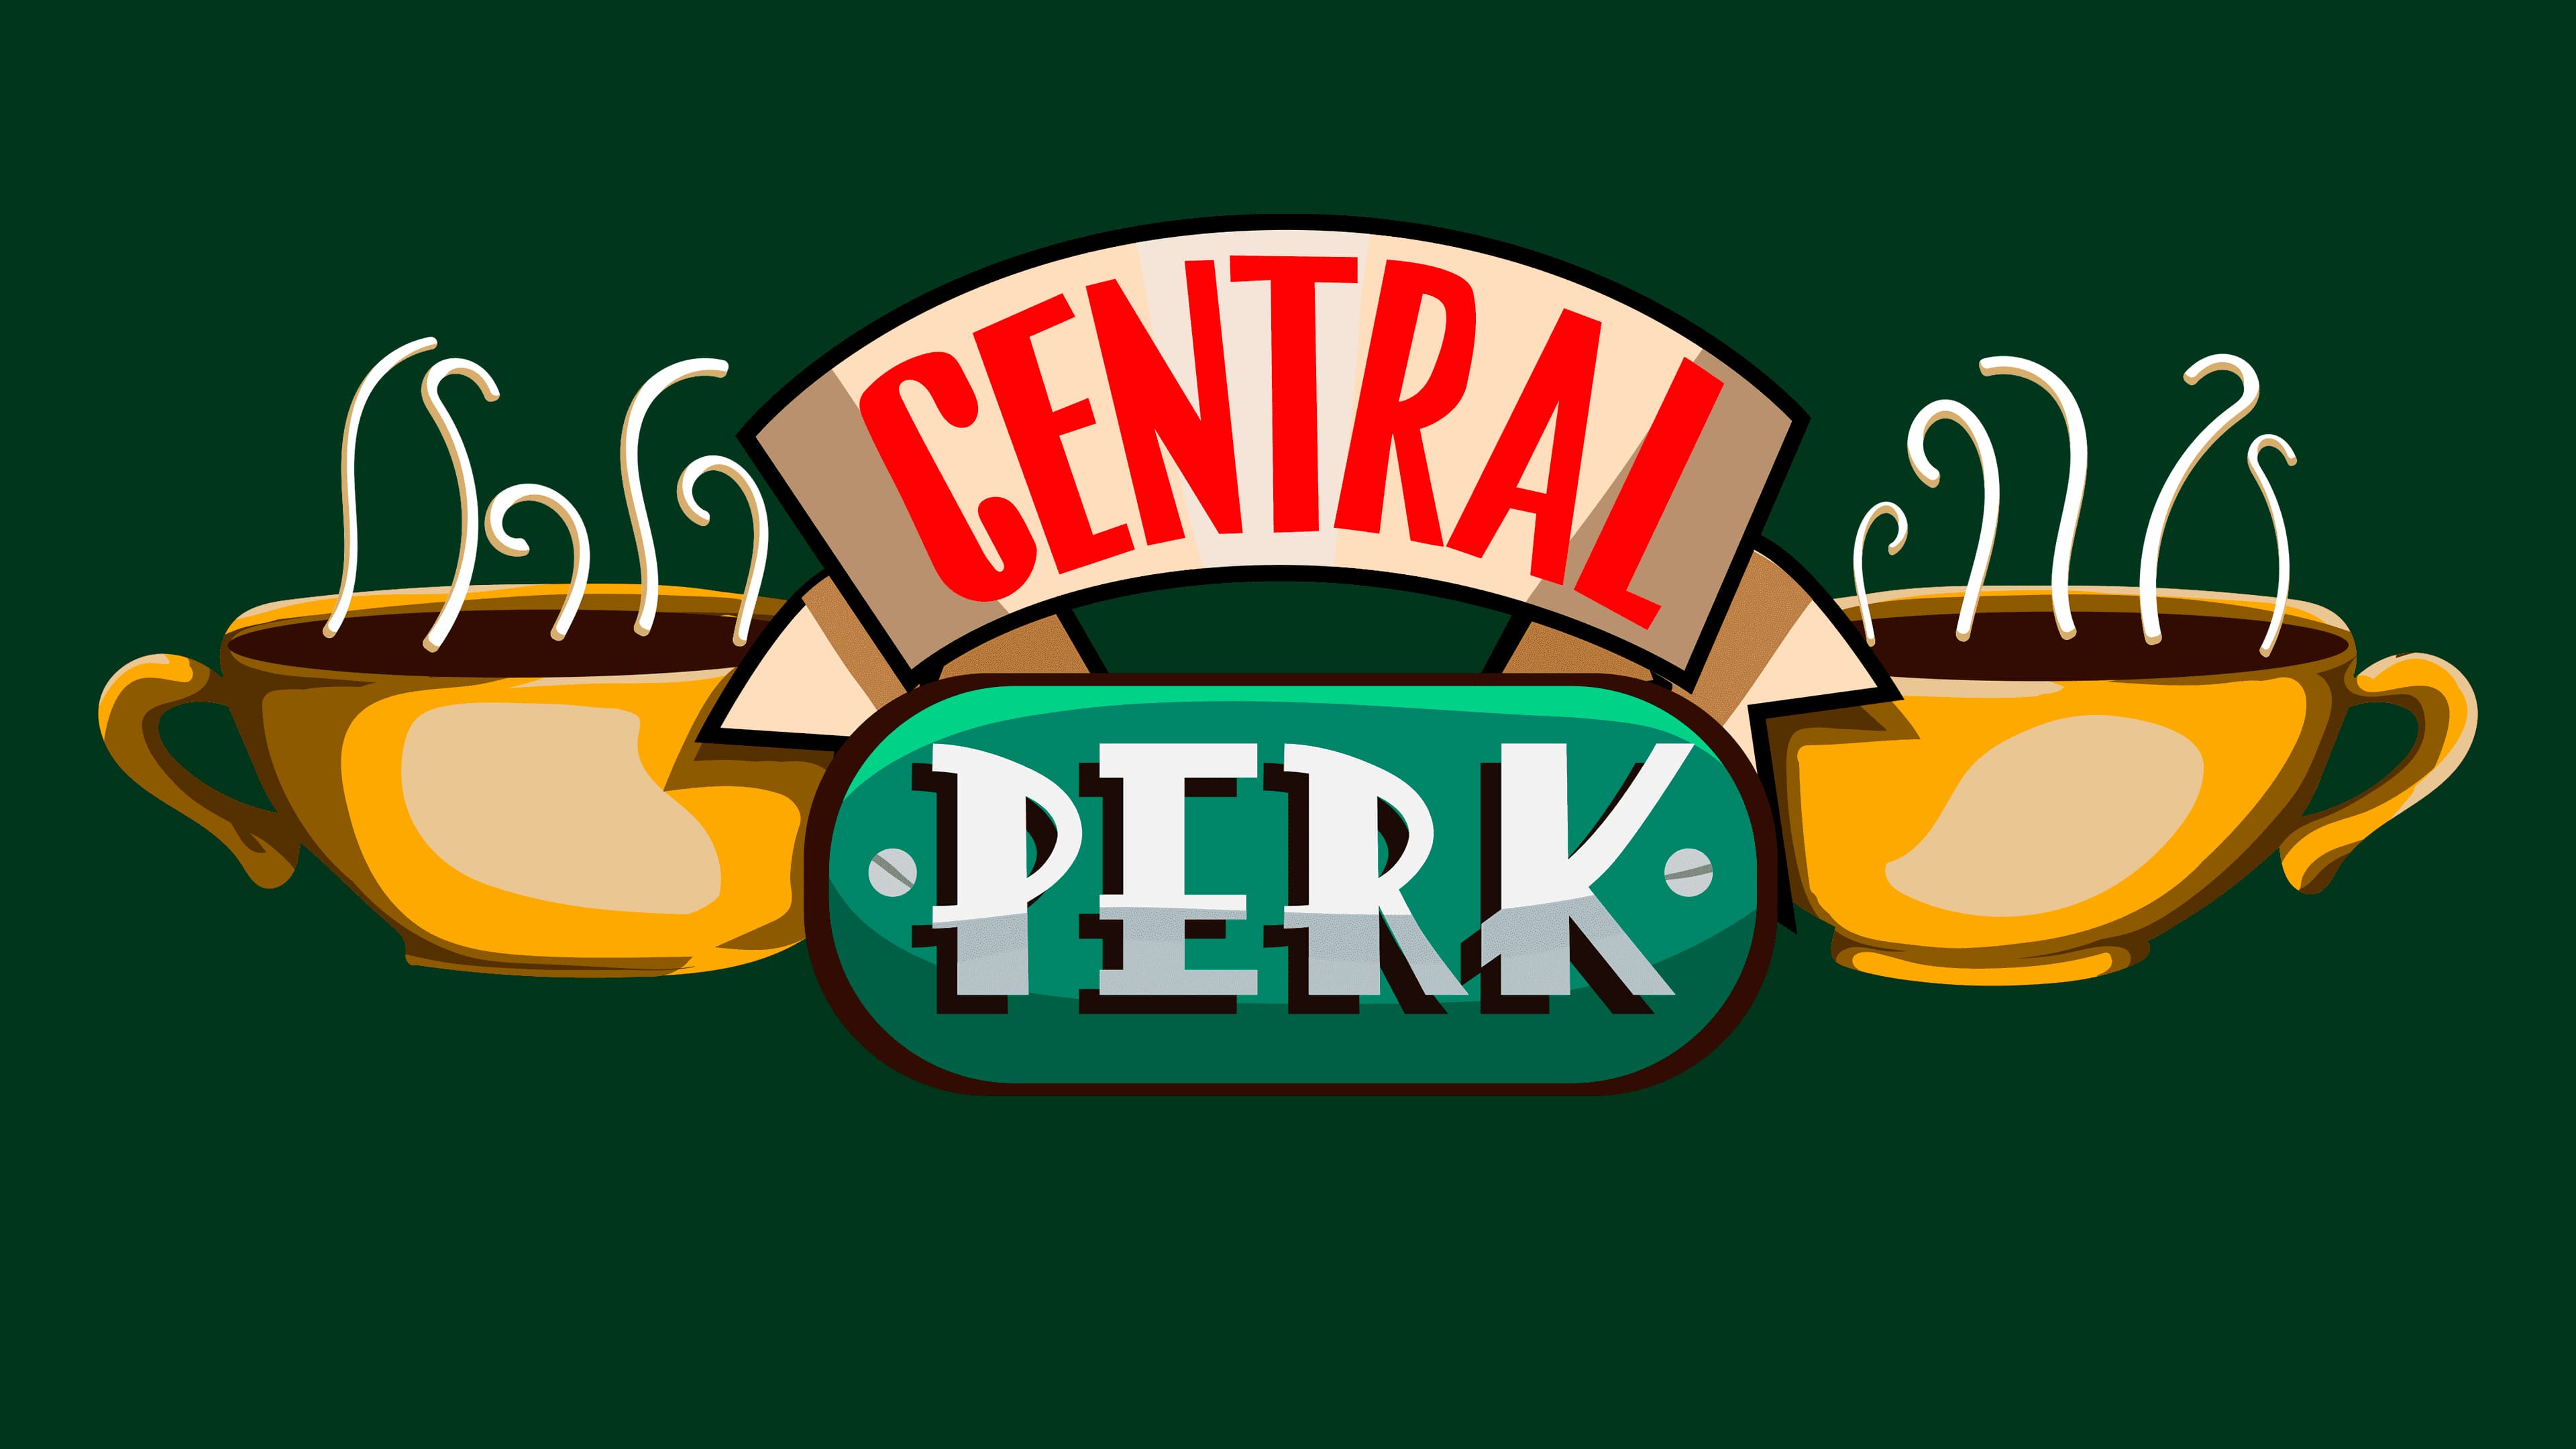 Update 137+ central perk logo best - camera.edu.vn